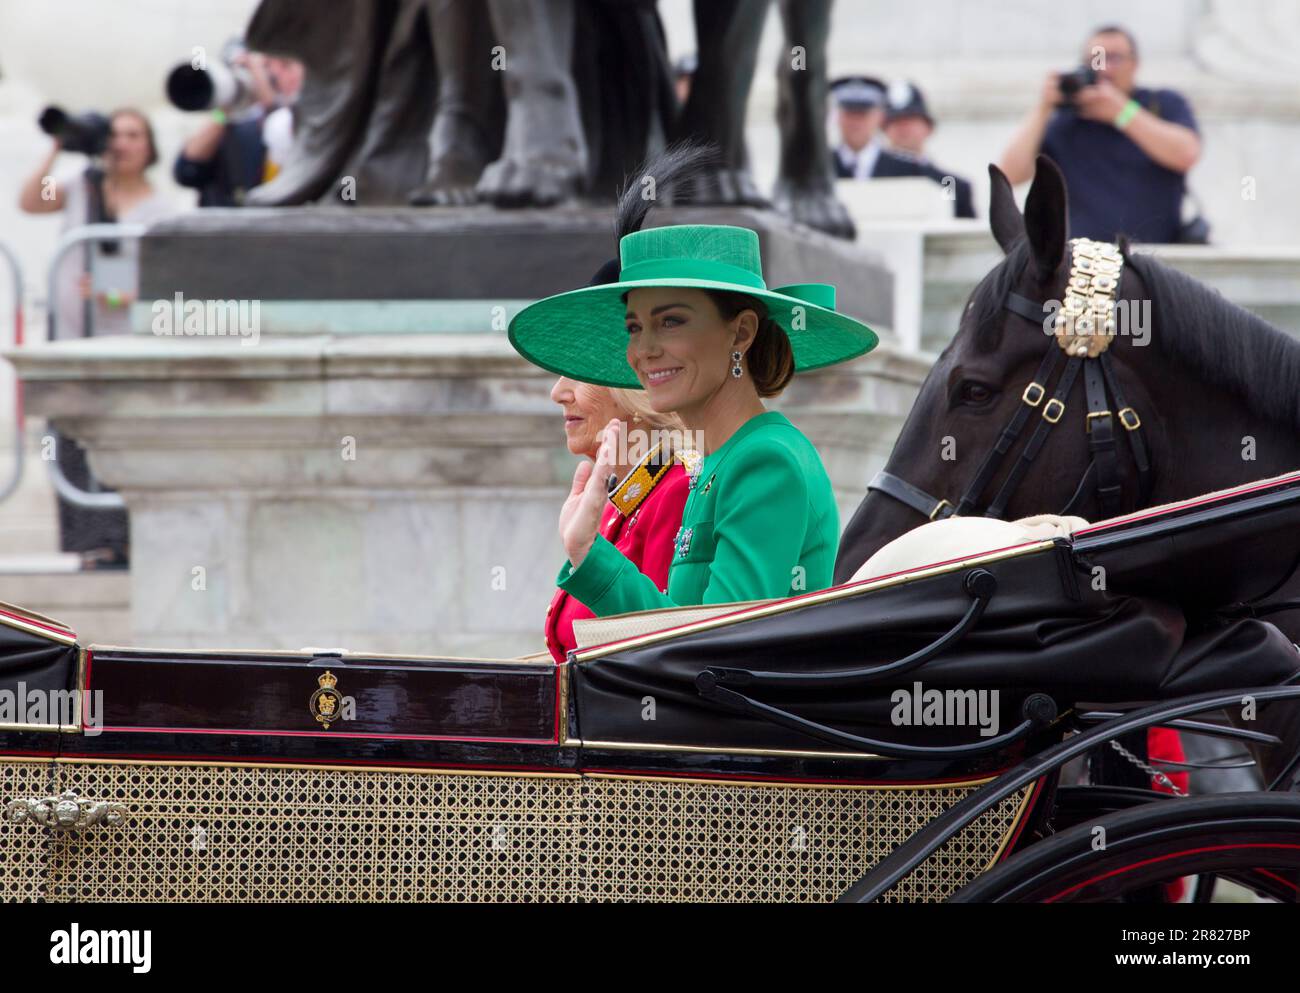 Queen Camilla und Catherine Princess of Wales in Open Horse Draw Carriage winken der Menge zu, die die Colour Color The Mall London England erobert Stockfoto